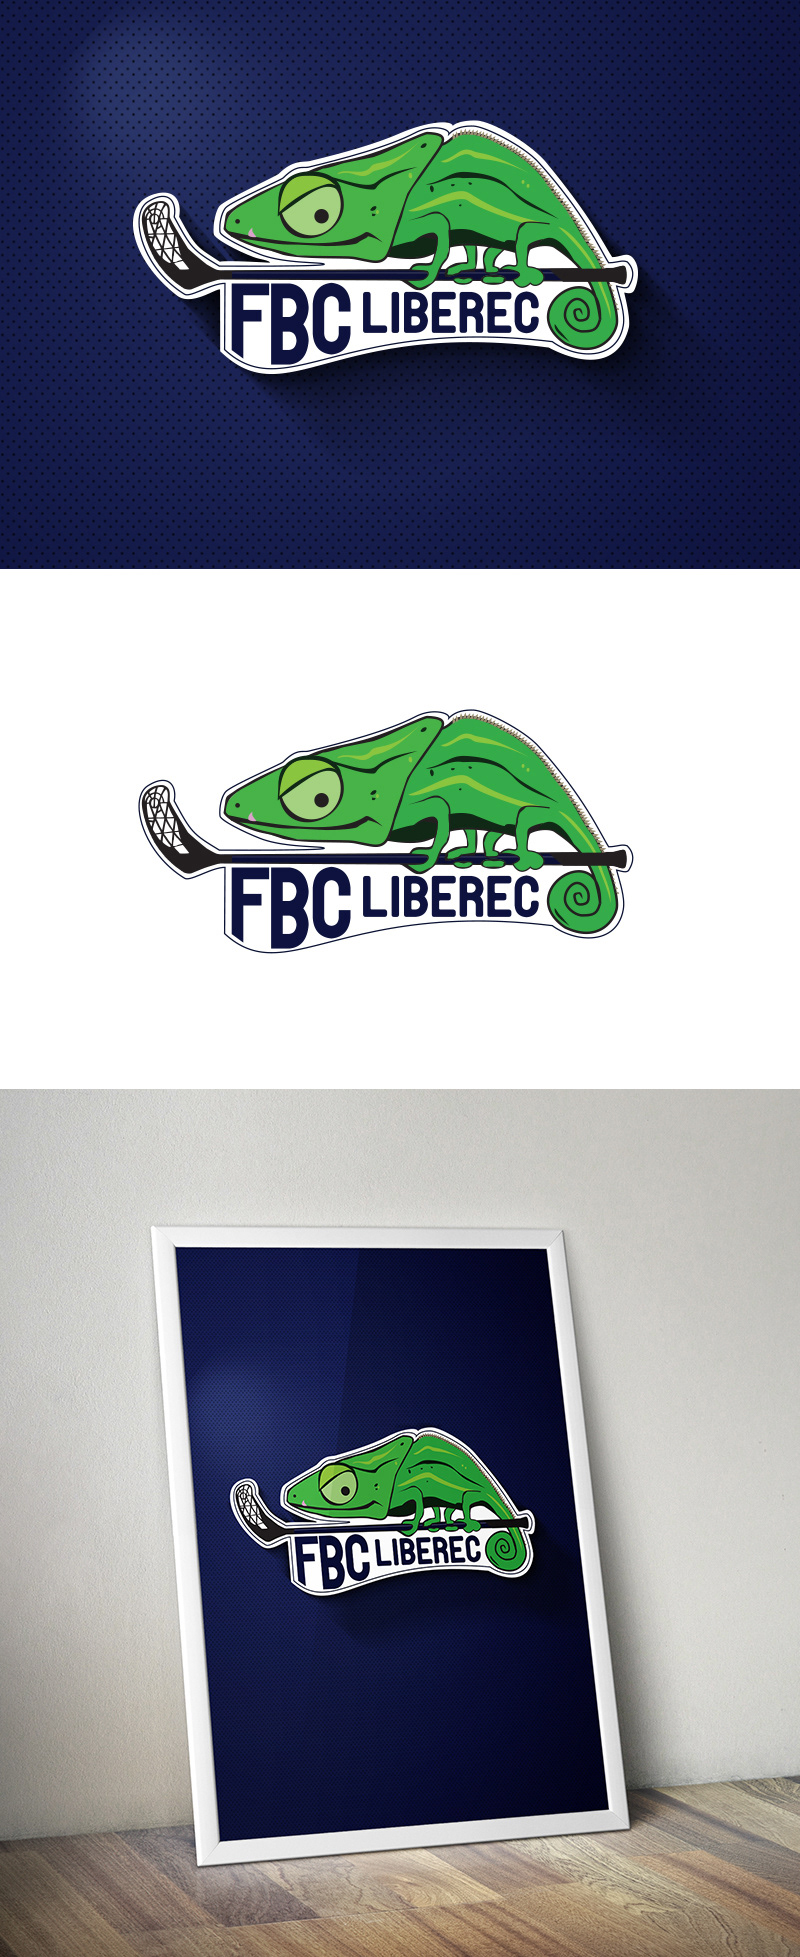 floorball sport logo chameleon liberec lizard